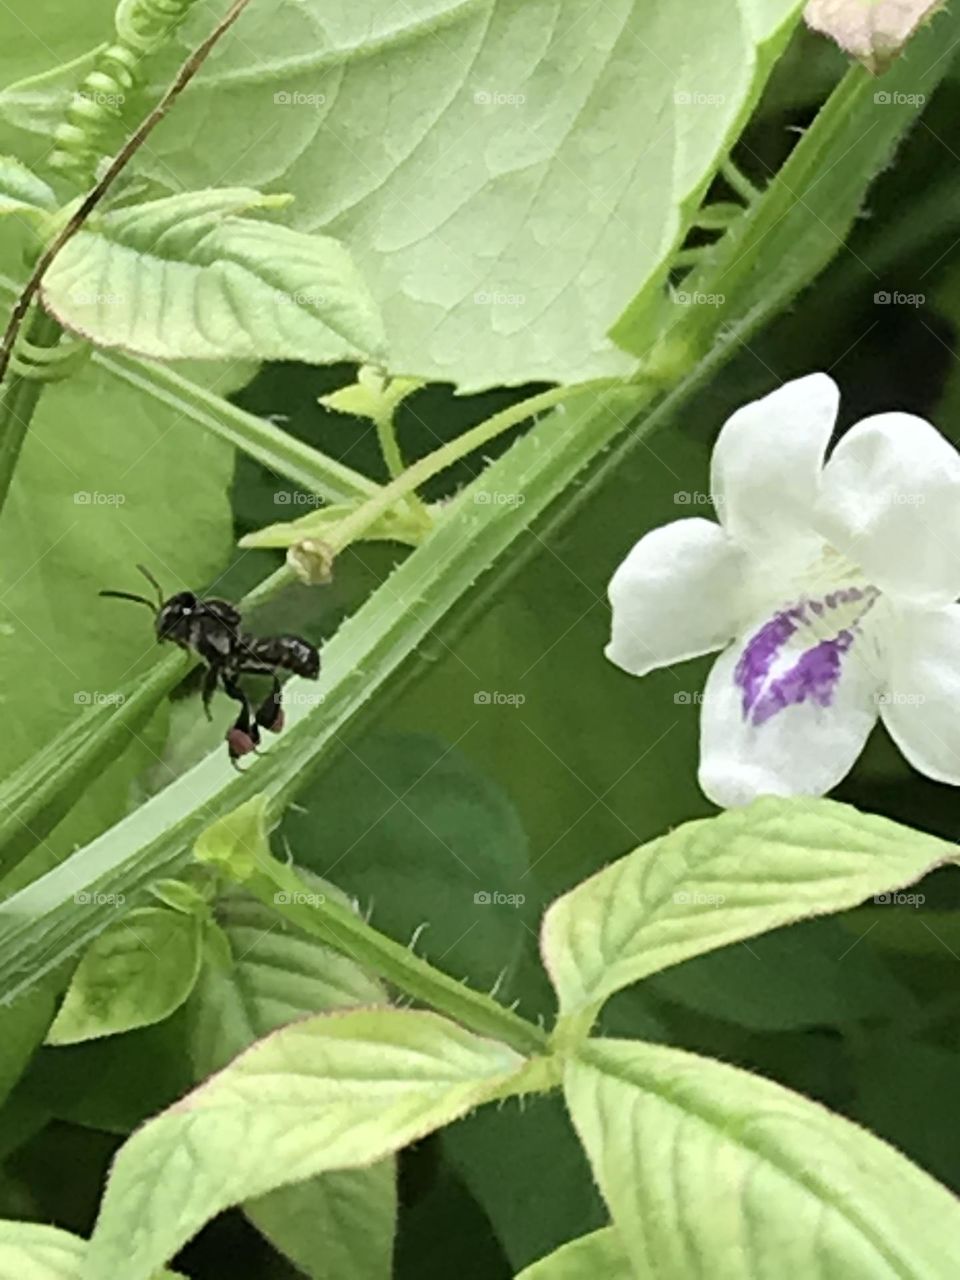 bugs & flower